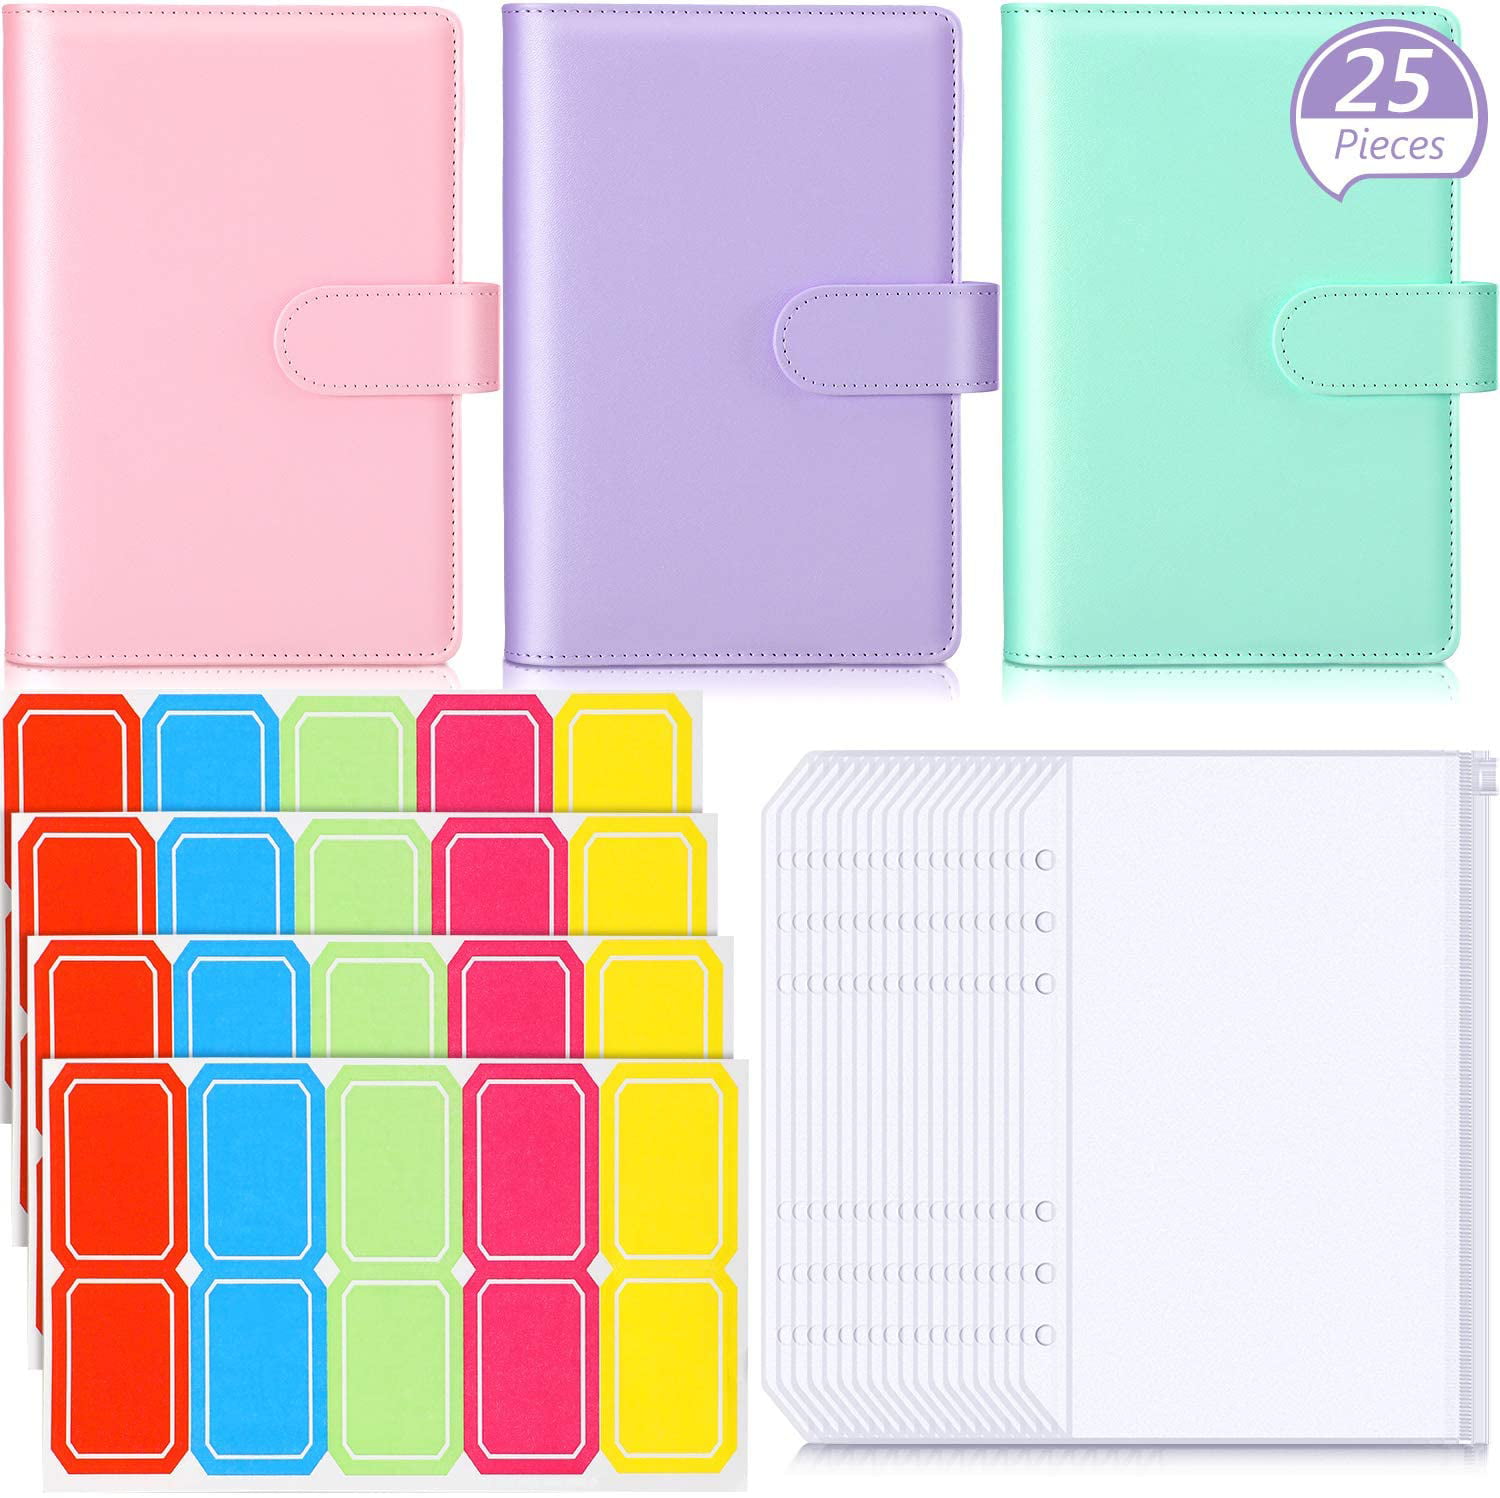 YoeeJob A6 Clear PVC Zipper Binder Pocket Insert,6 Holes Loose Leaf Notebook Refills Filler Organizer,Pack of 16